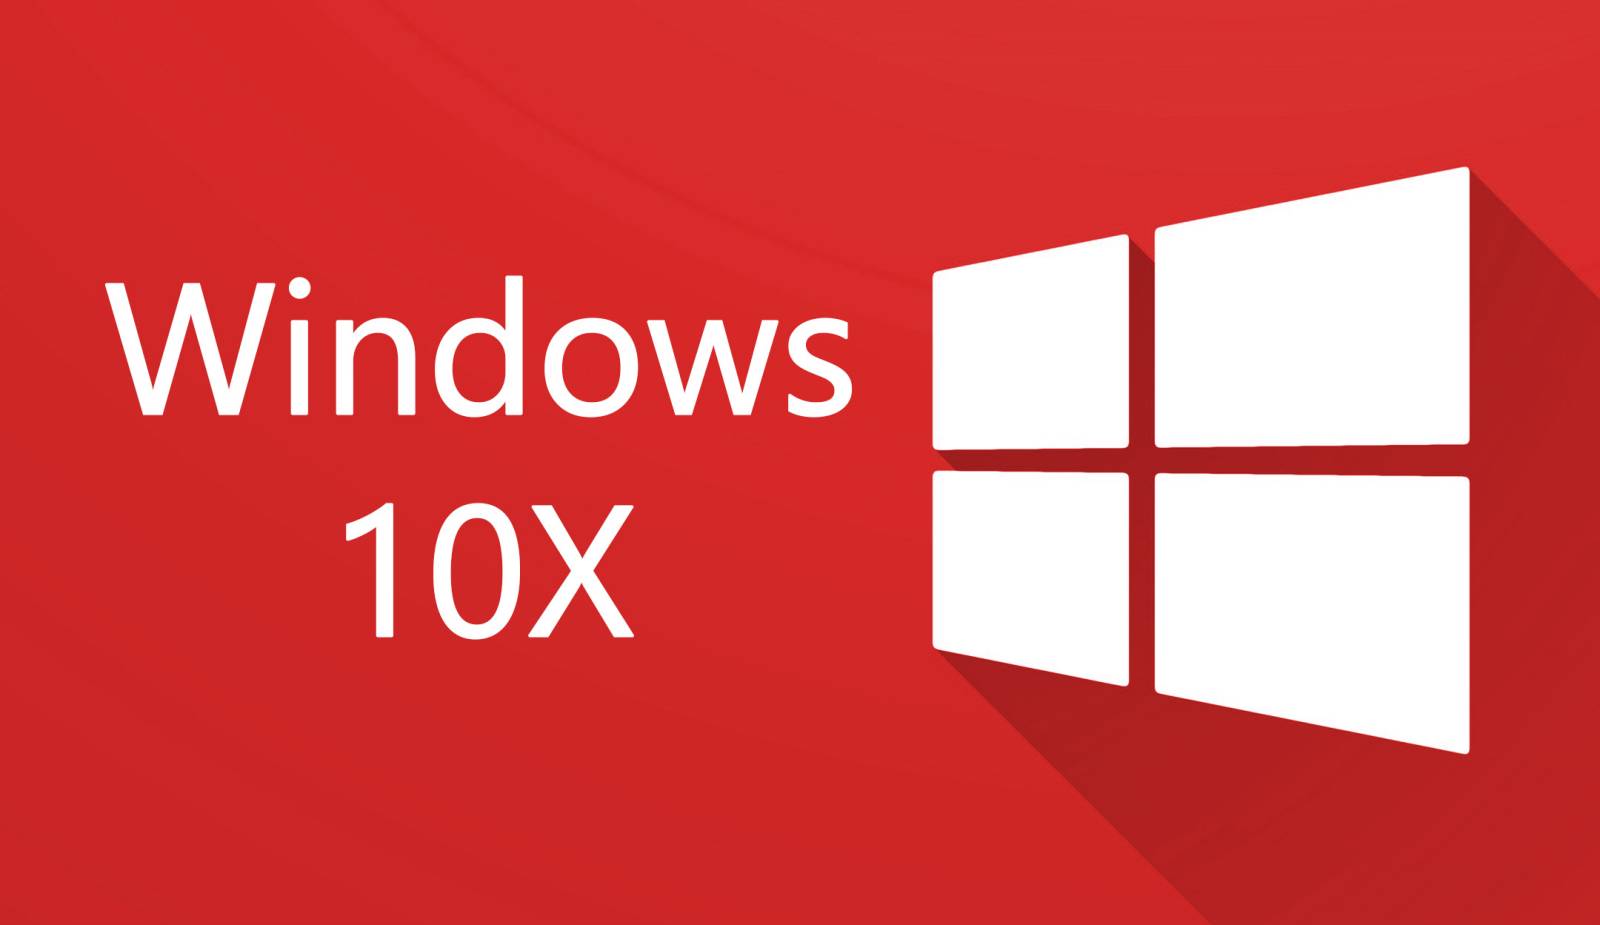 Windows 10X update